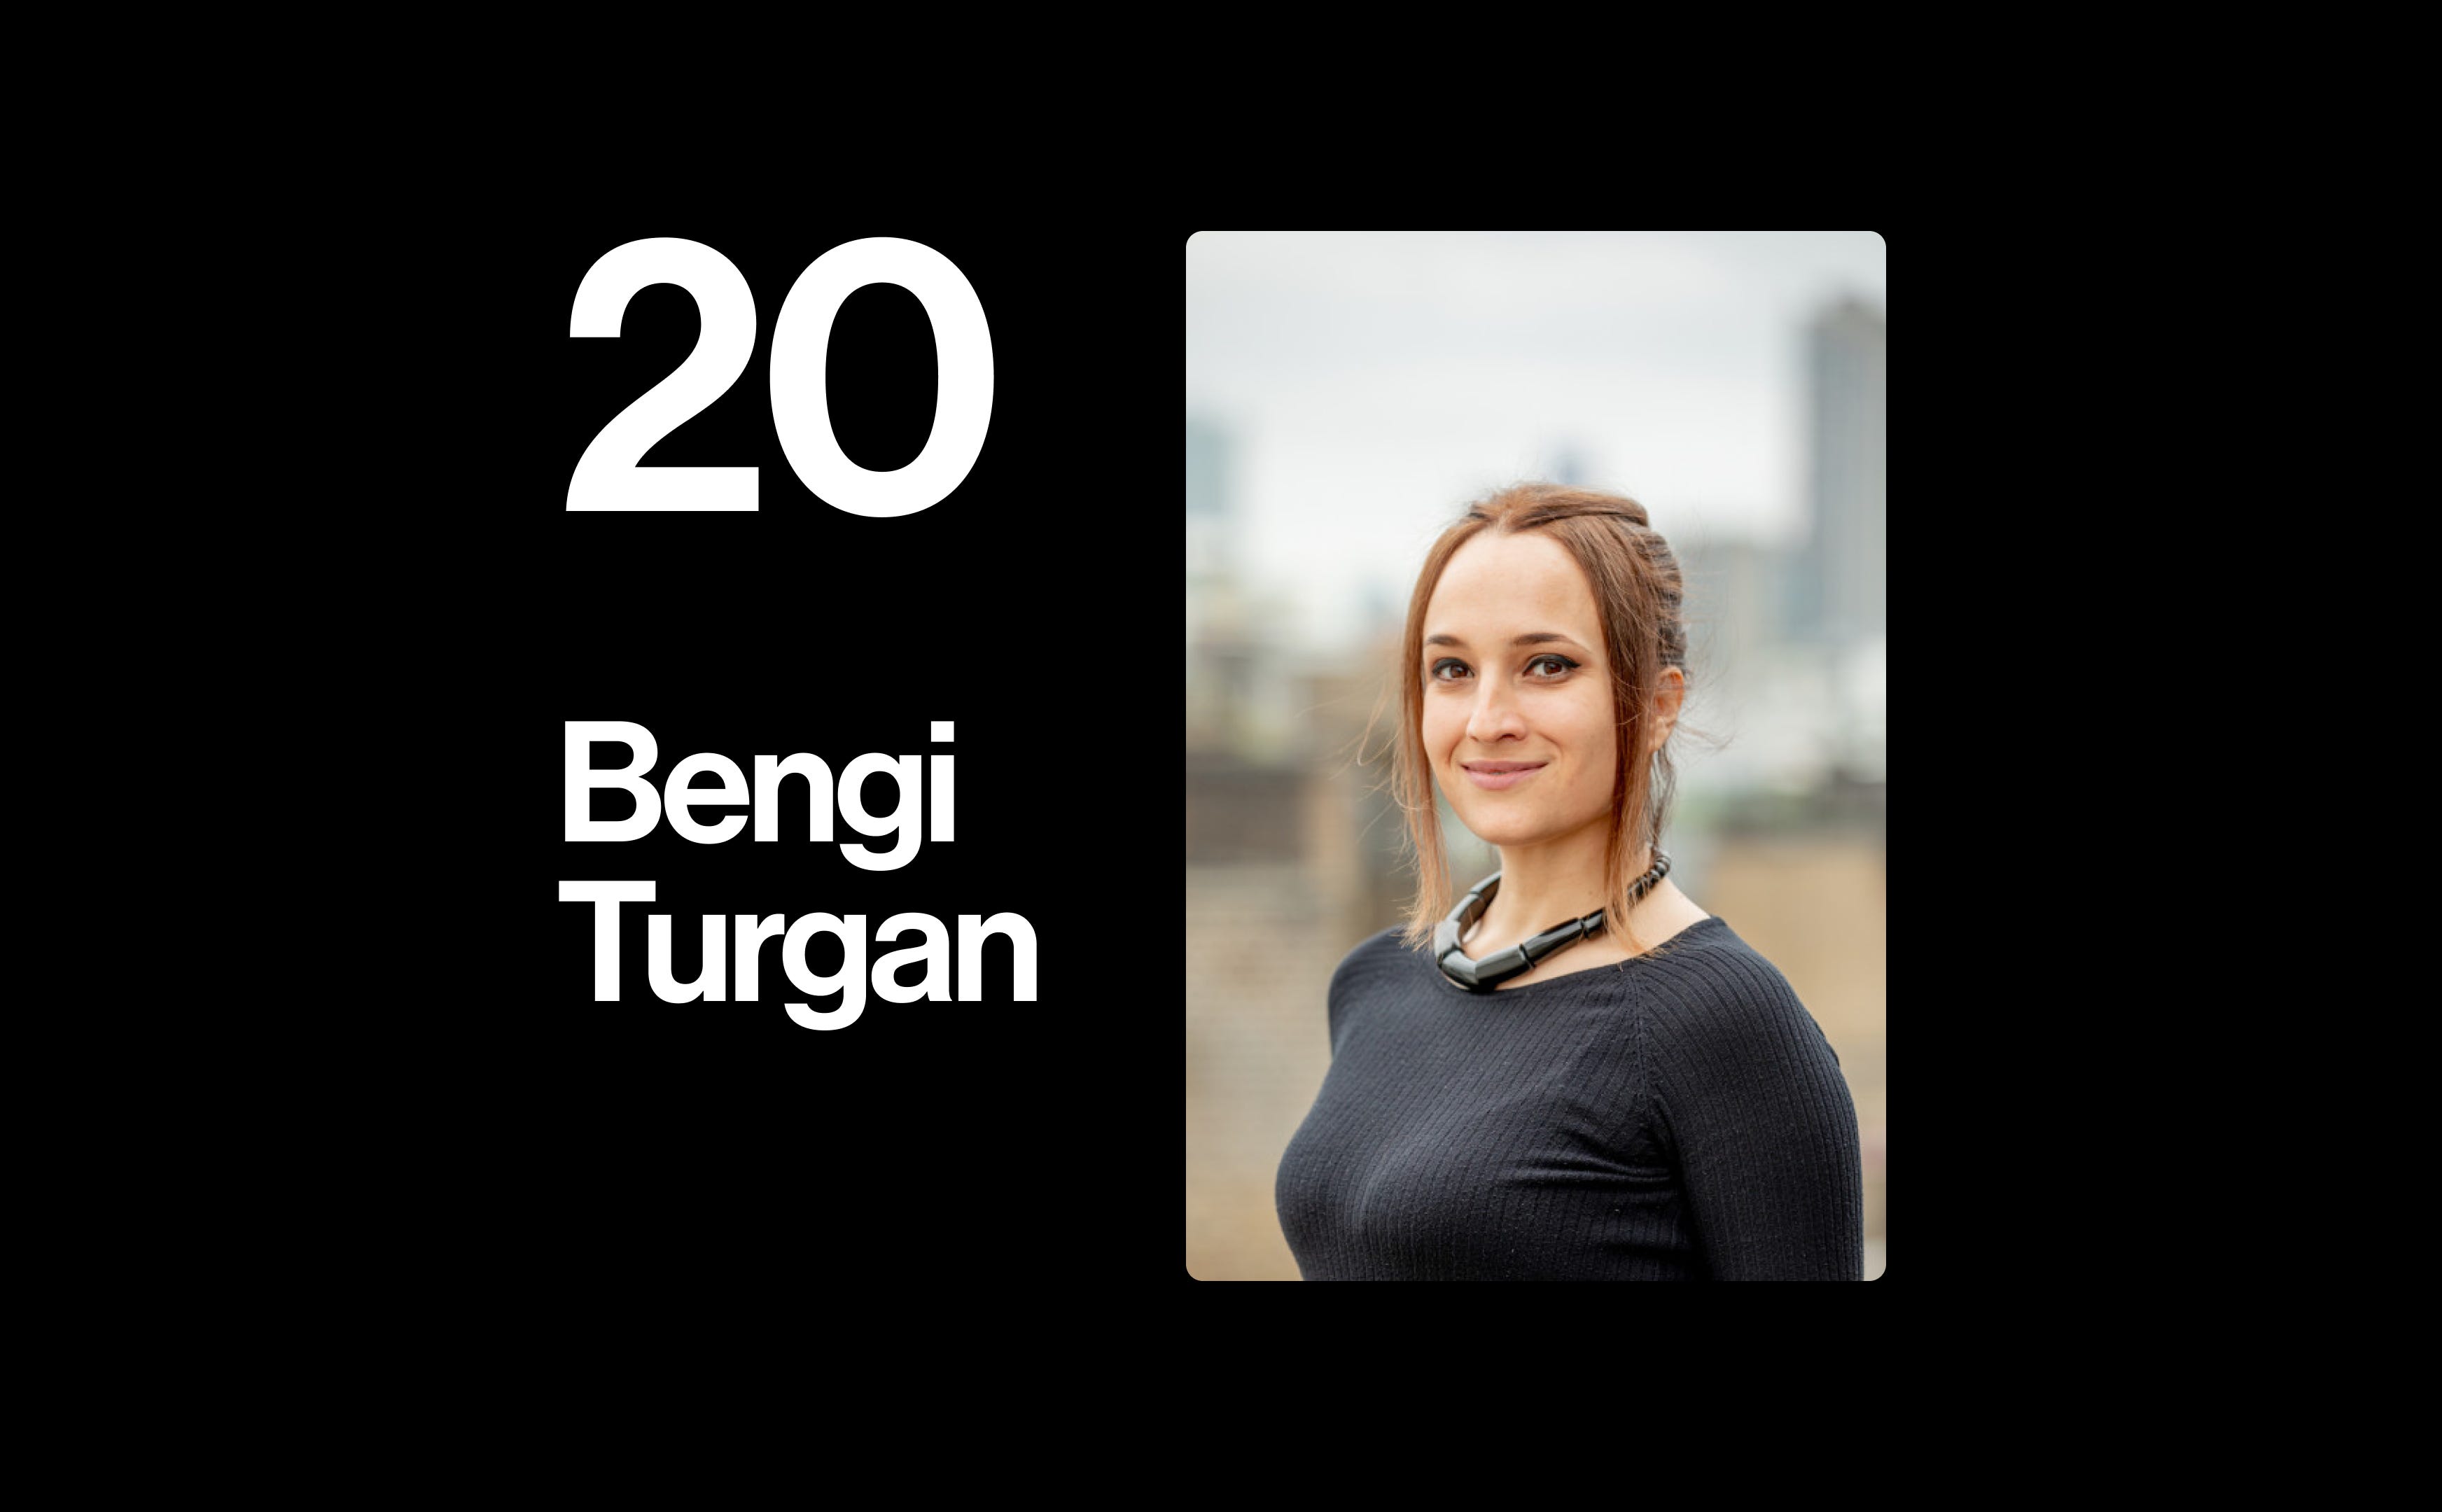 Bengi Turgan: Co-CEO of ATÖLYE